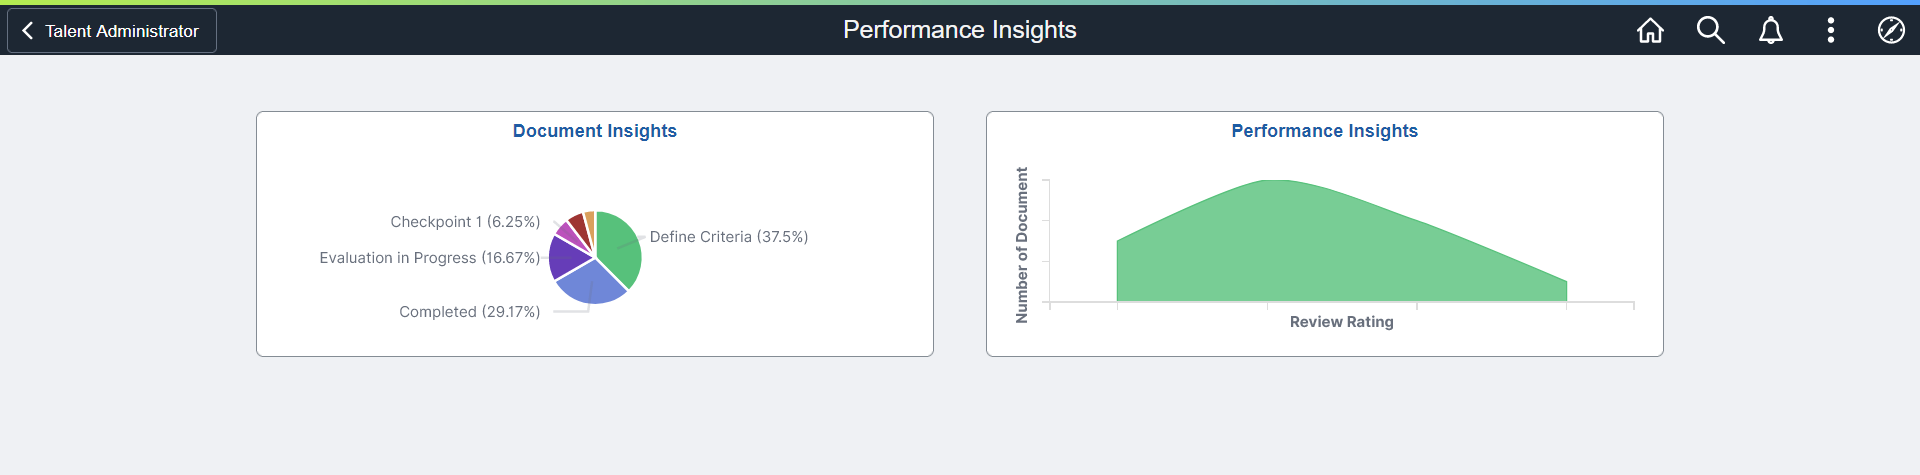 Performance Insights dashboard